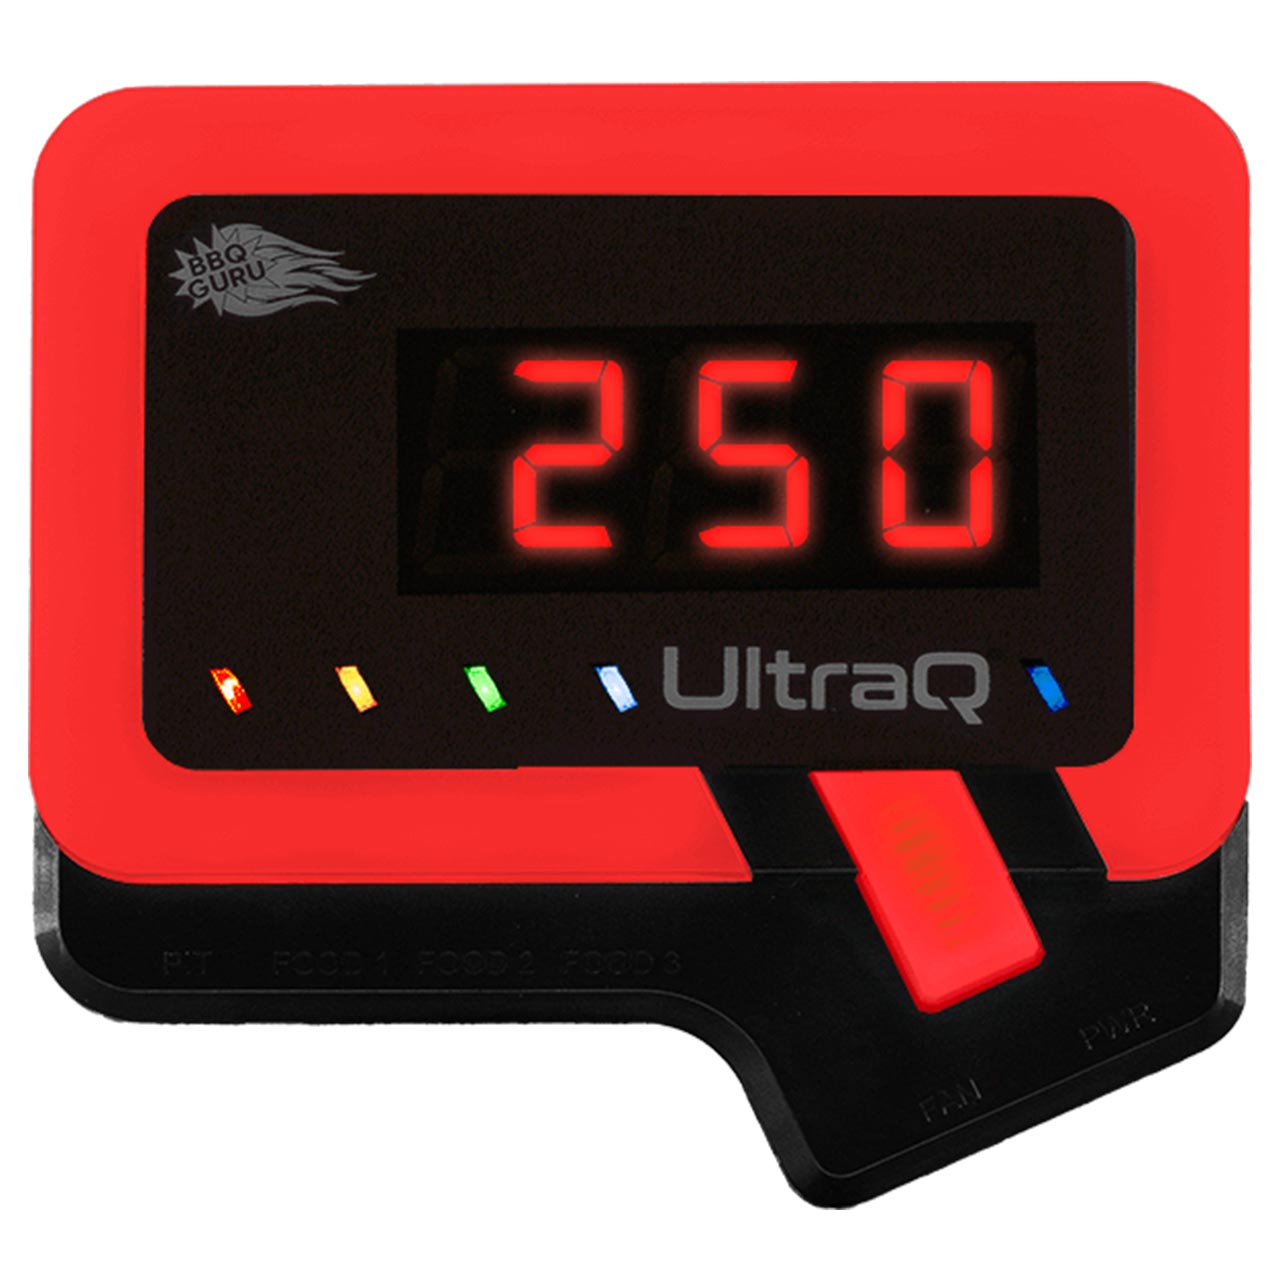 BBQ Guru UltraQ Bluetooth und WLAN Thermometer mit Temperatursteuerung Keramik Set